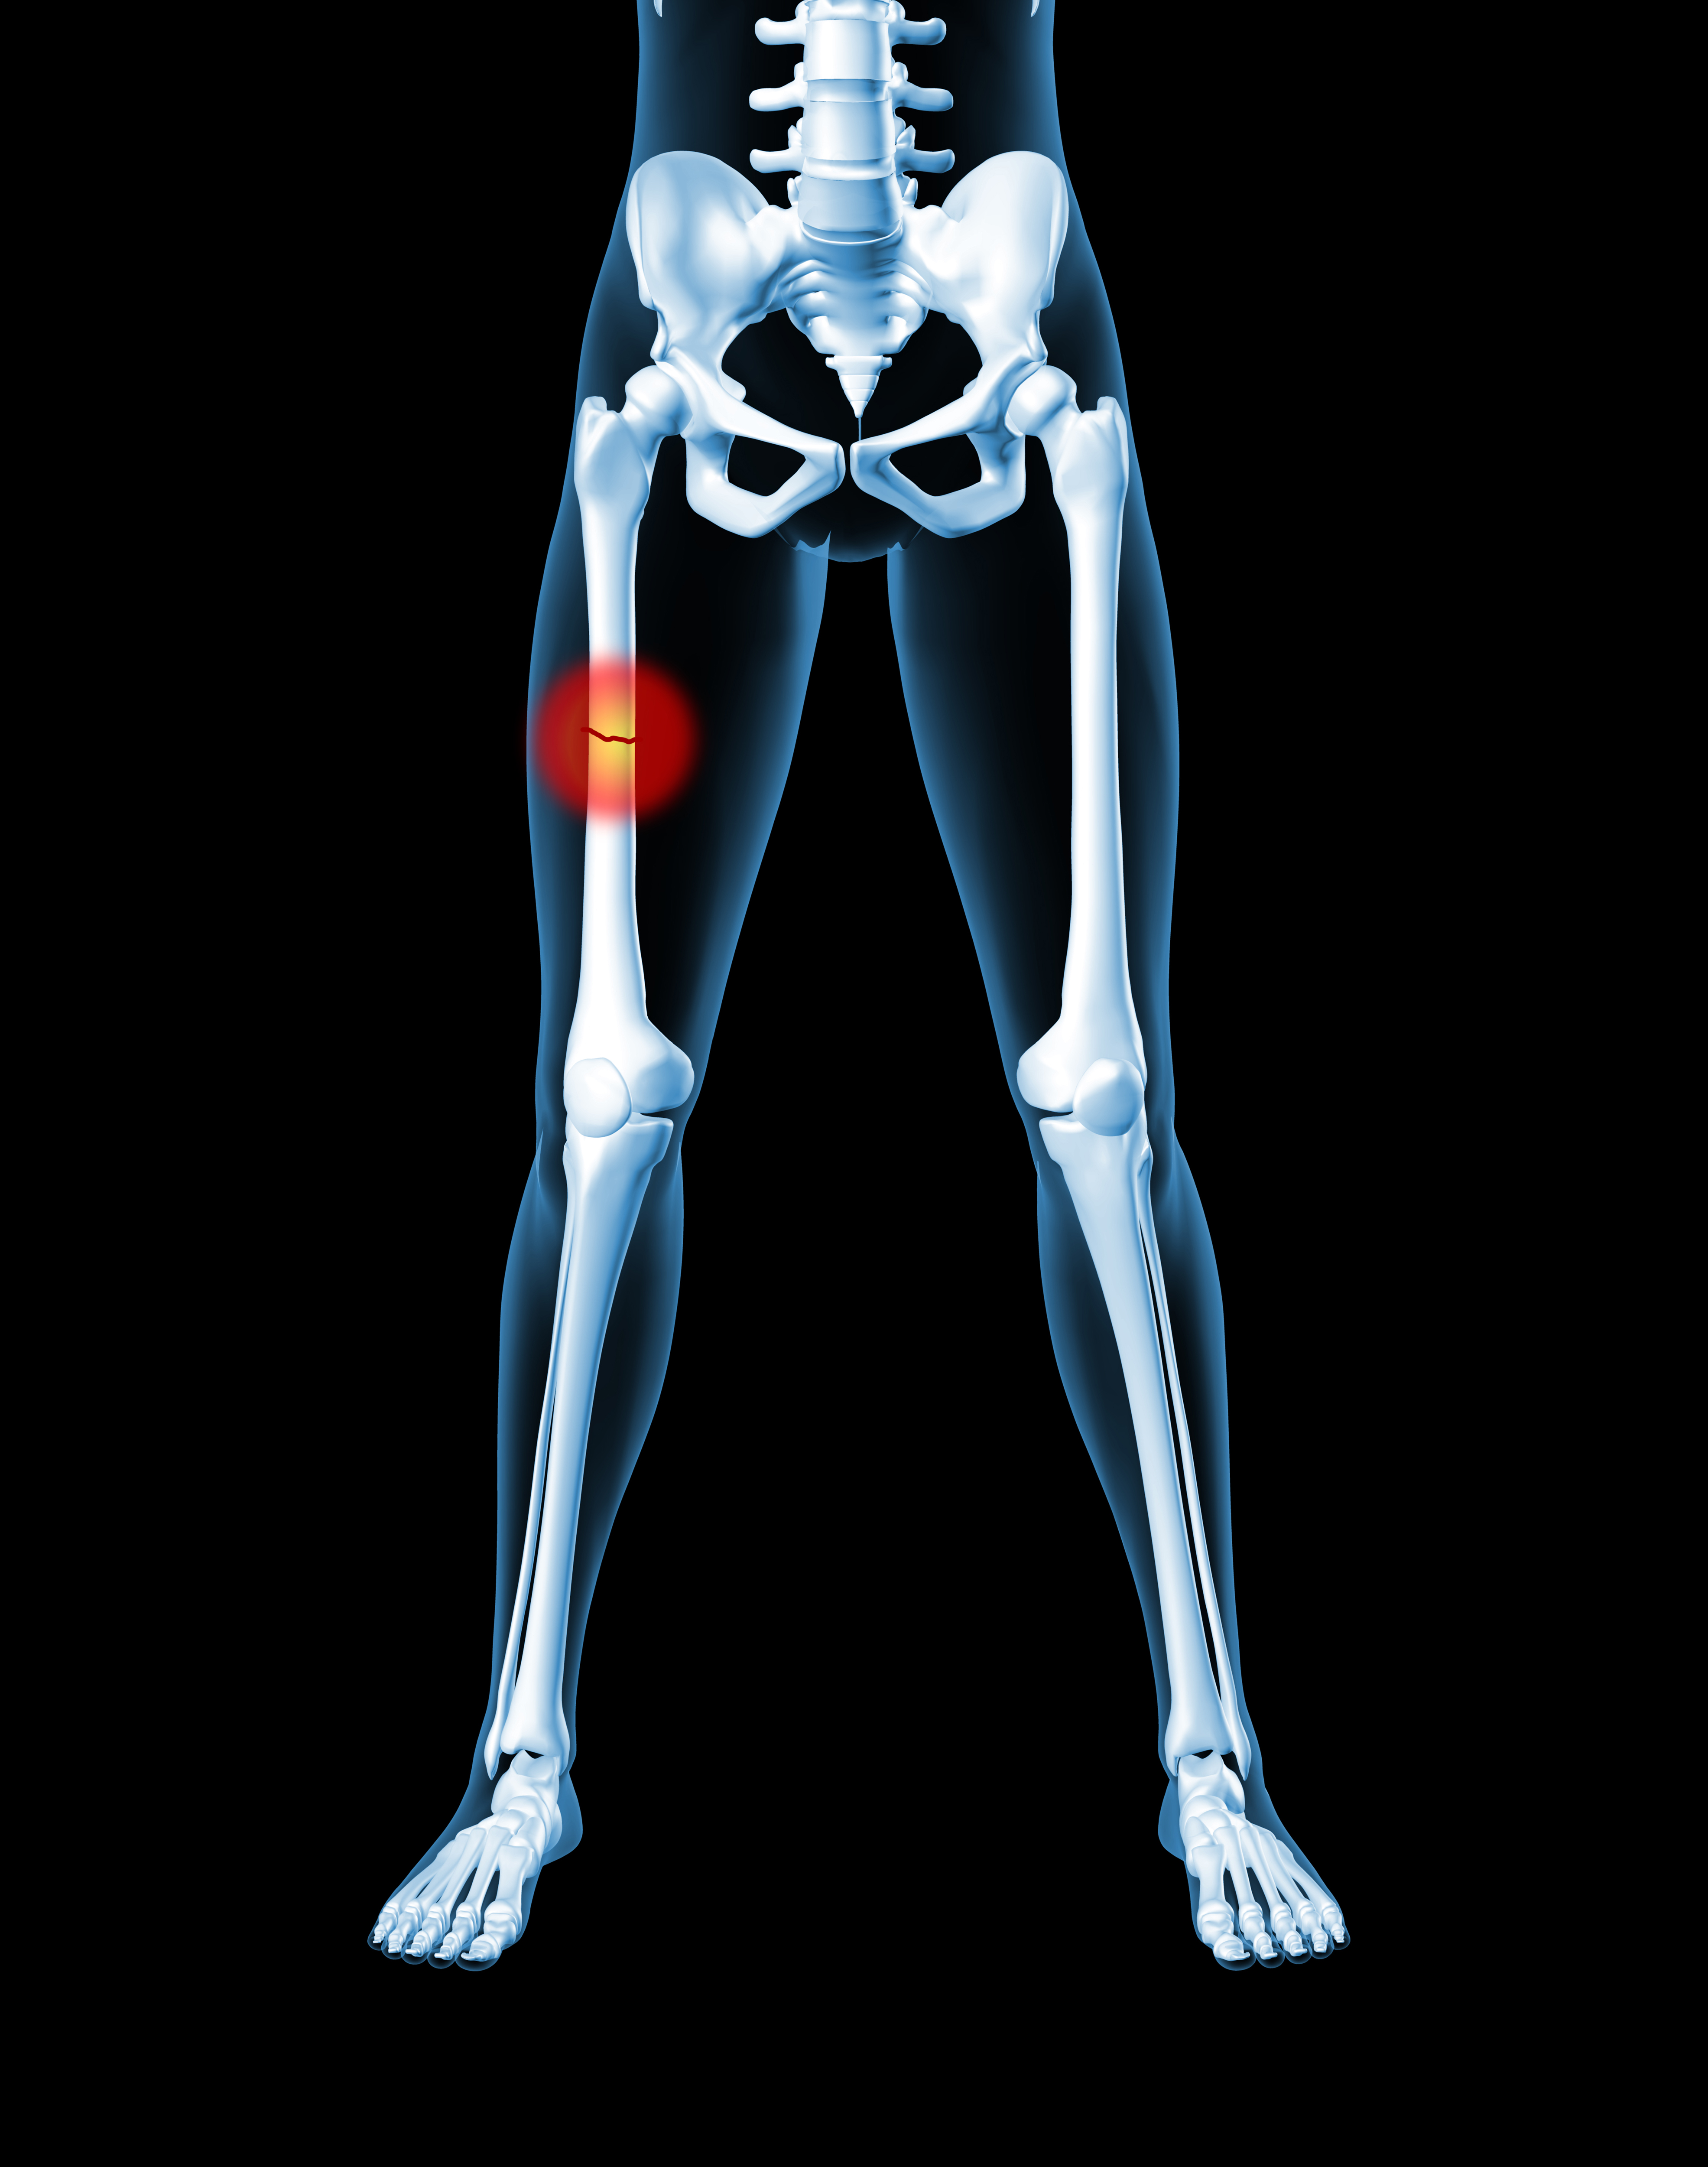 Переломы скелета. Женский скелет. Скелет женских бедер. Скелет человека с переломом костей. Скелет человека бедро.